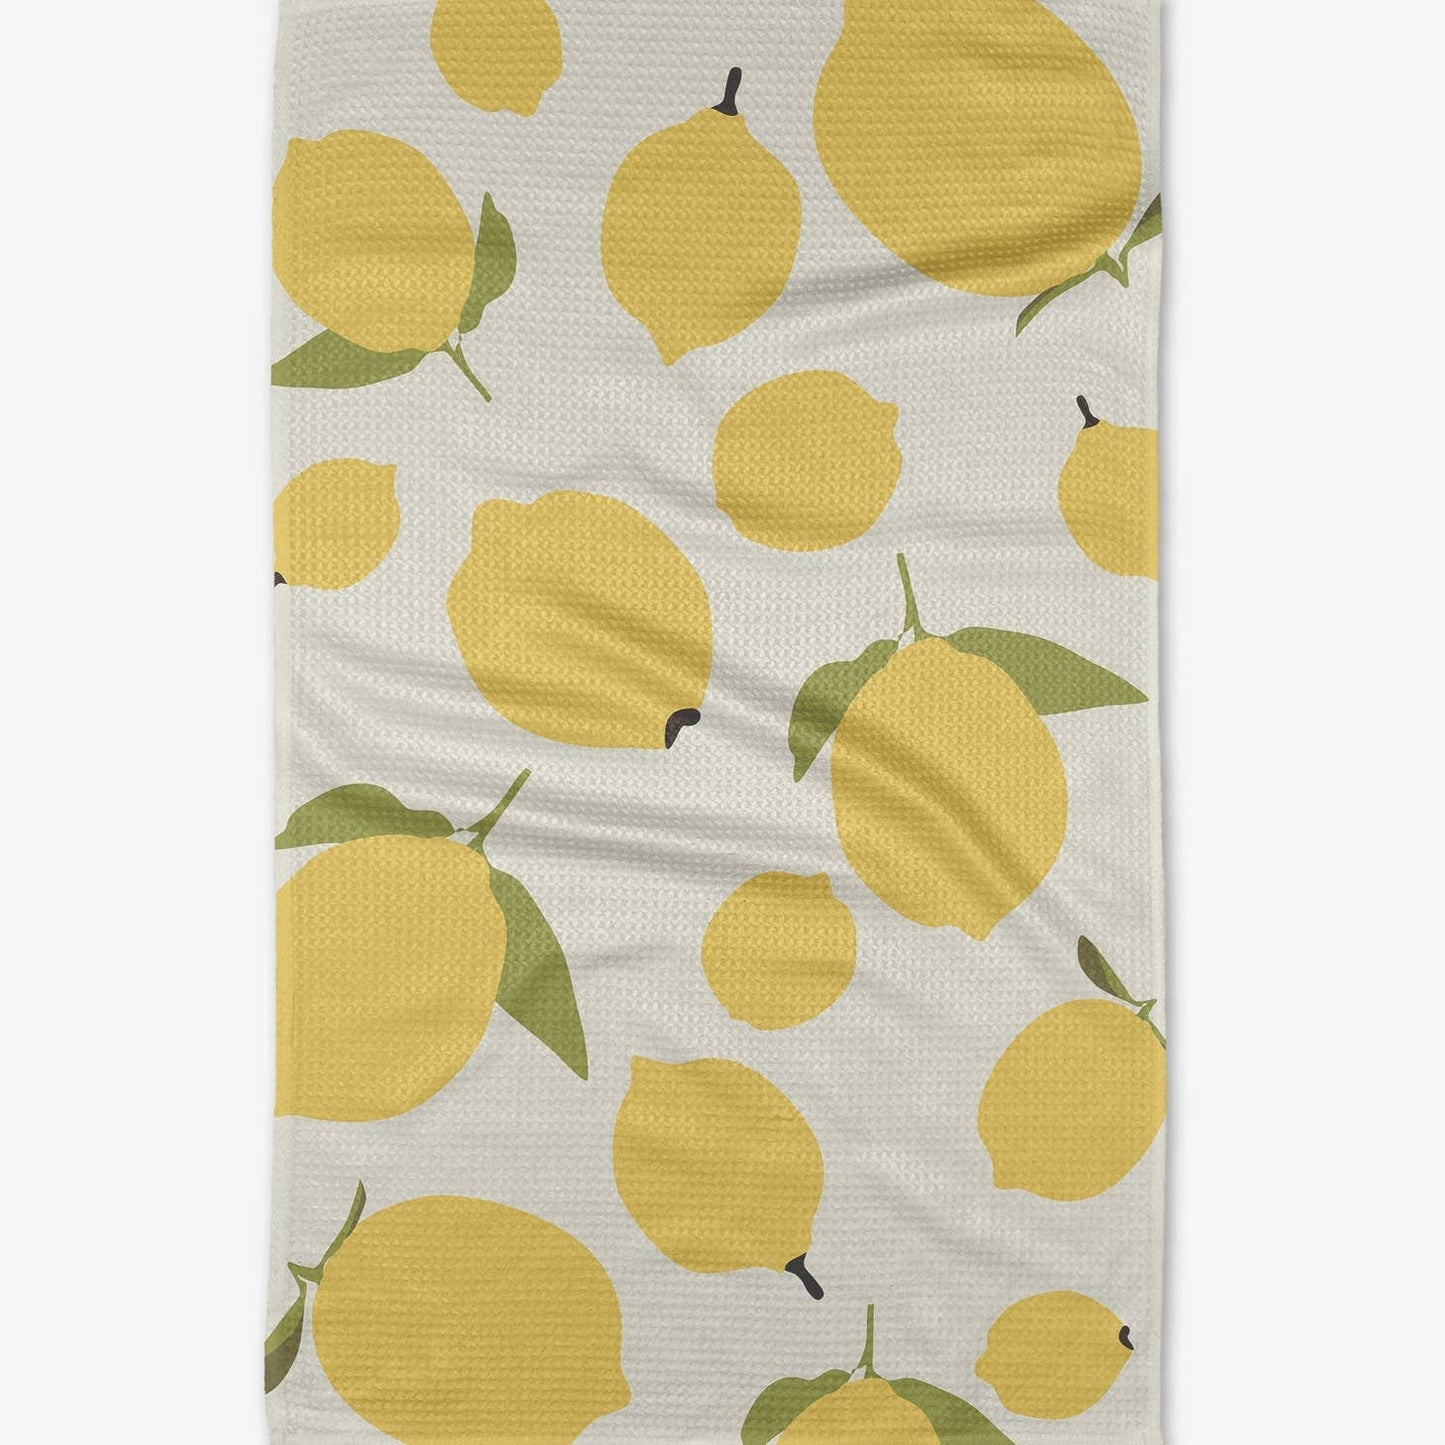 Geometry Sunny Lemons Kitchen Towel - Favorite Little Things Co